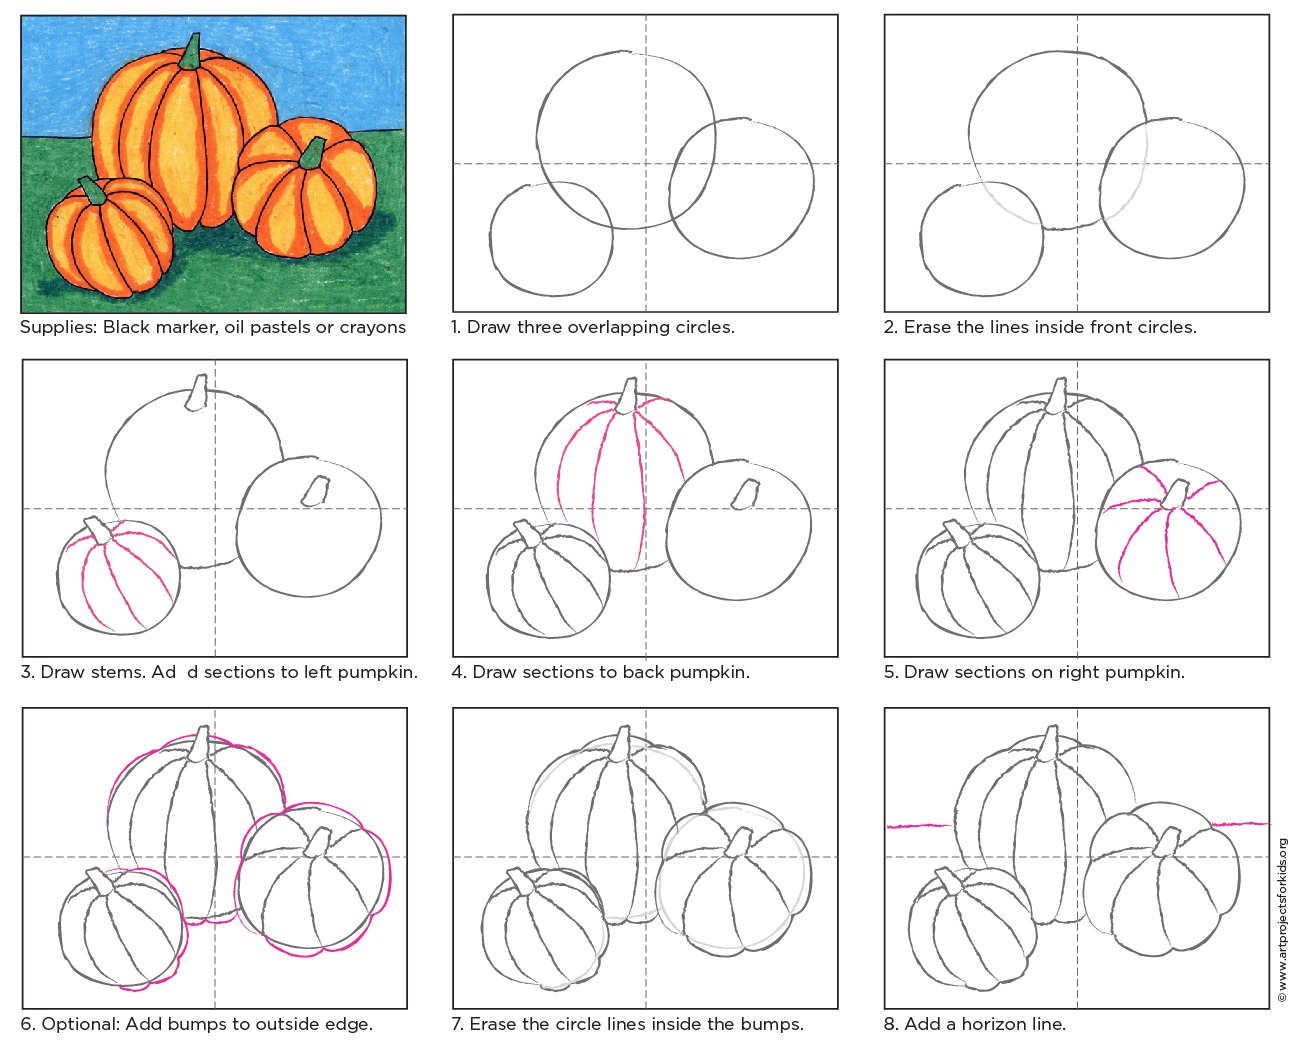 Pumpkin Drawing · Art Projects for Kids